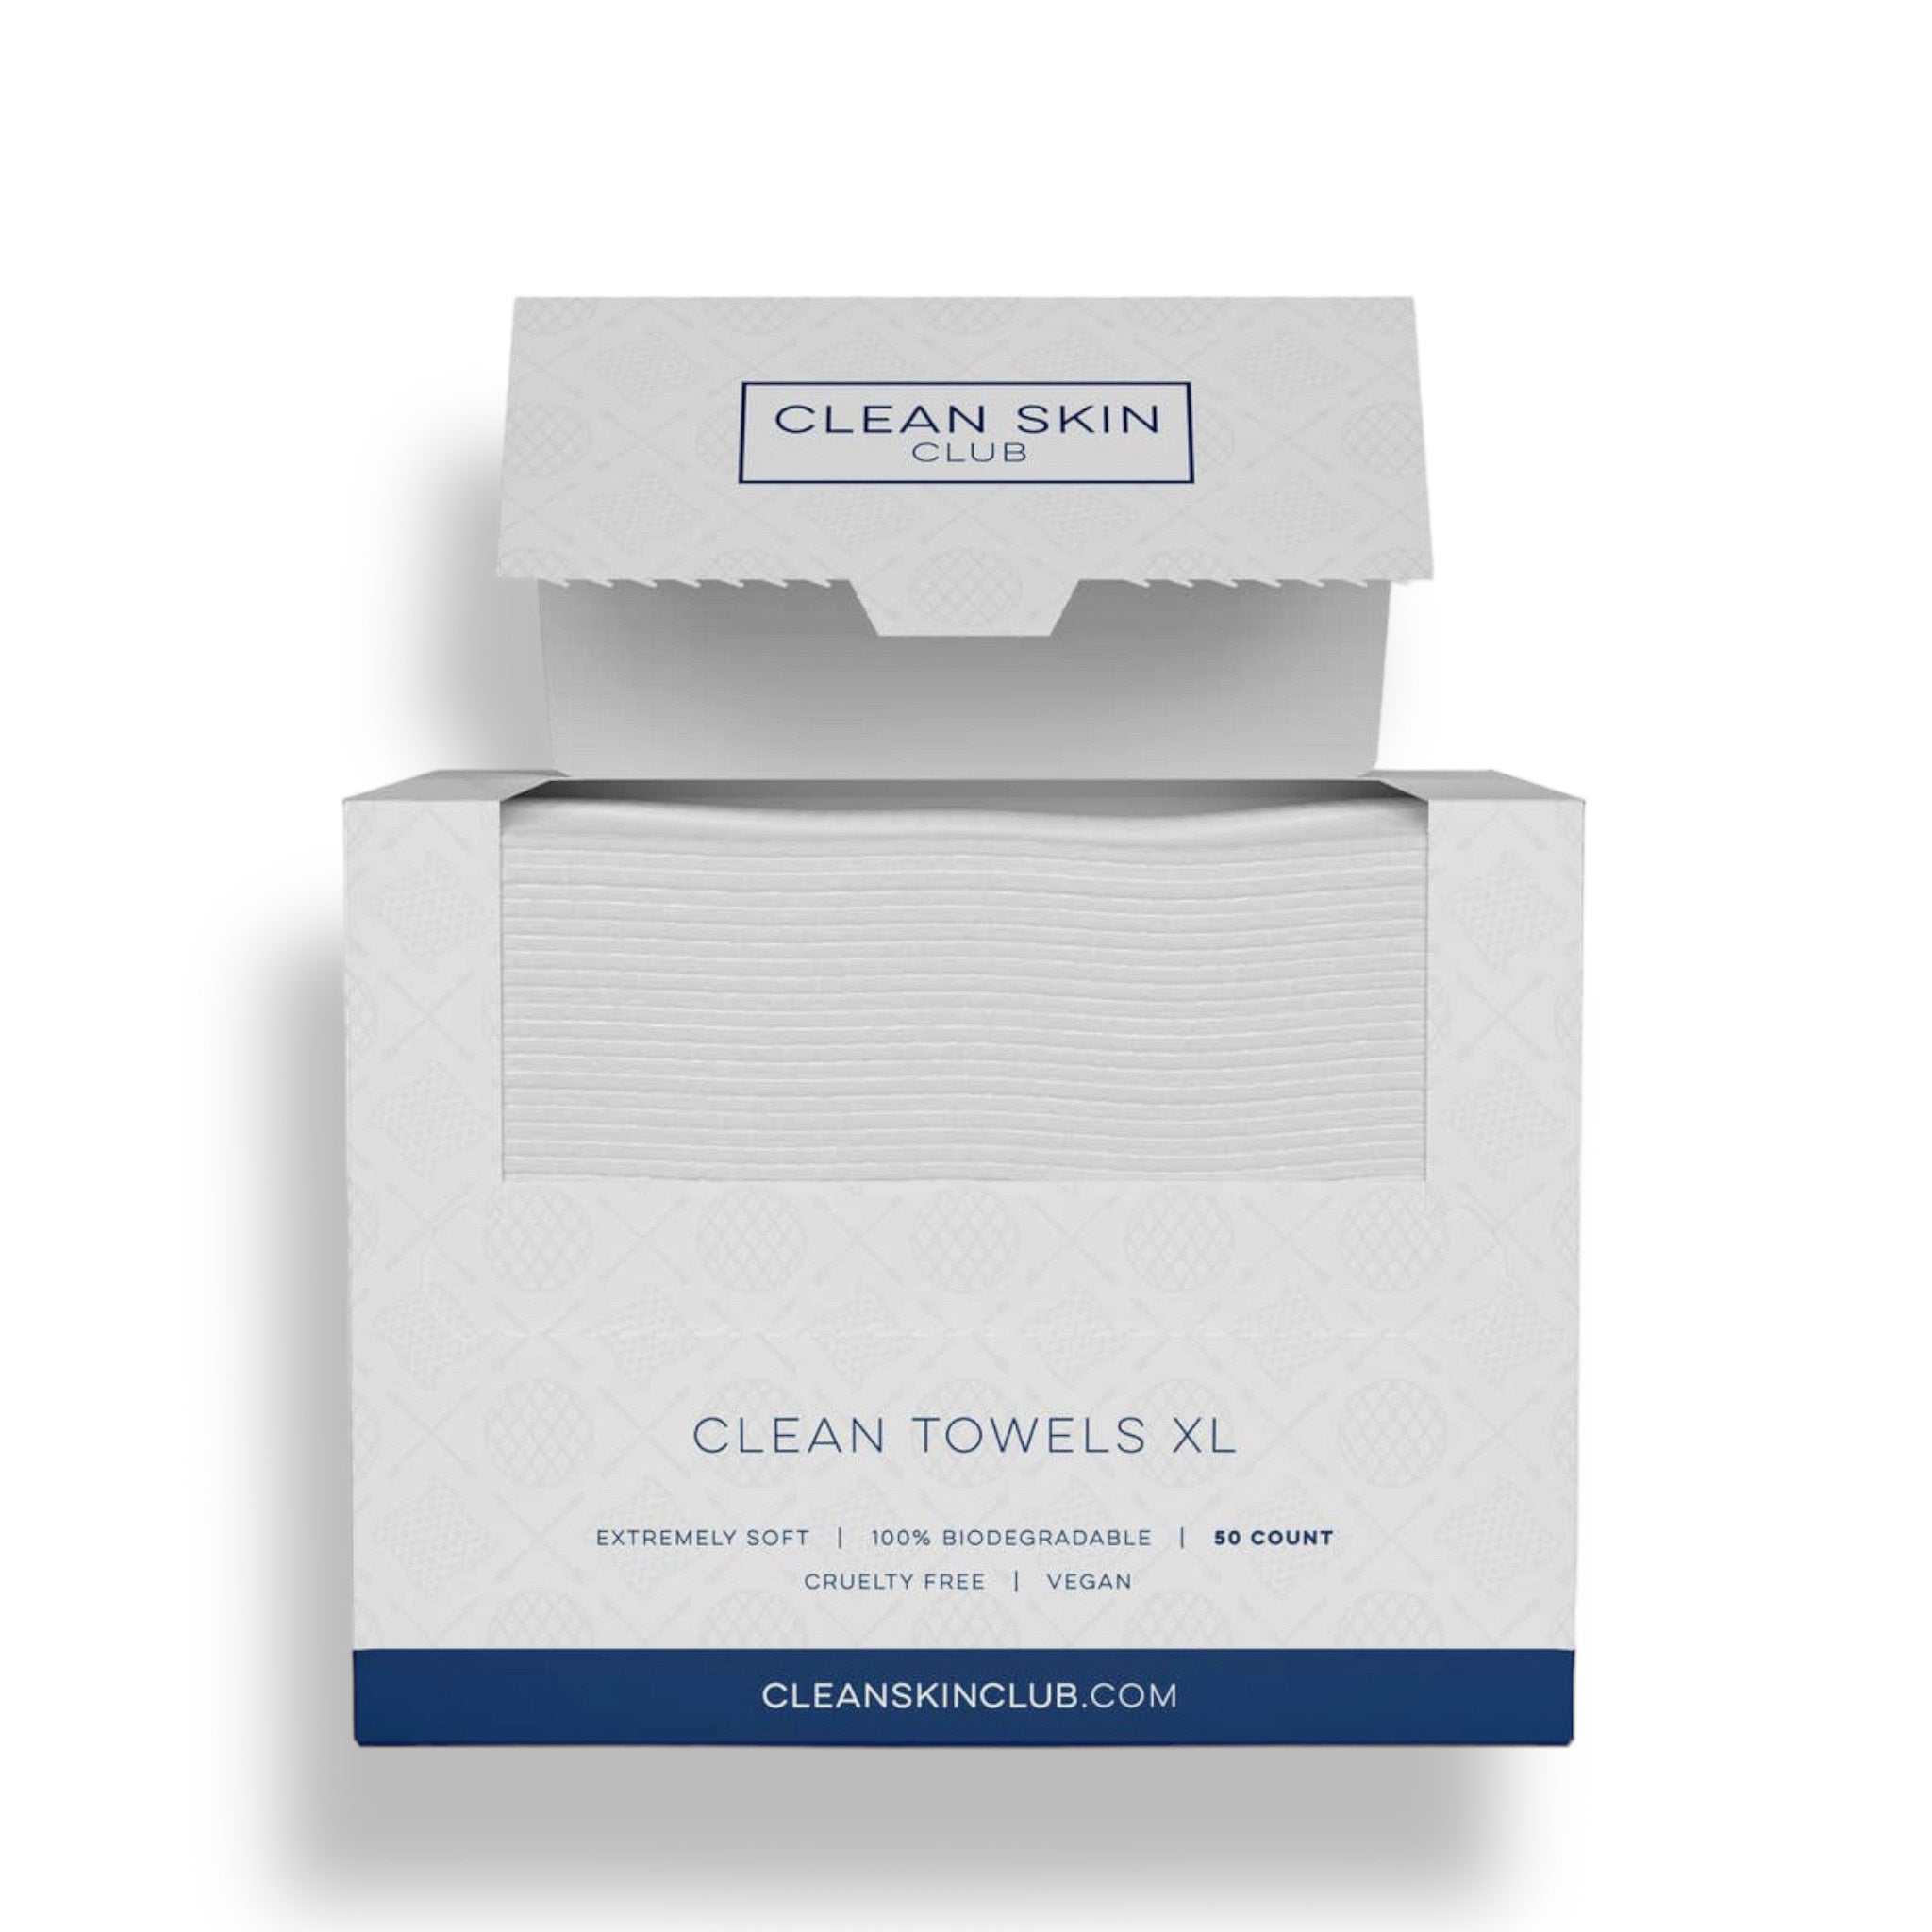 CLEAN SKIN CLUB CLEAN TOWELS XL-50 COUNT